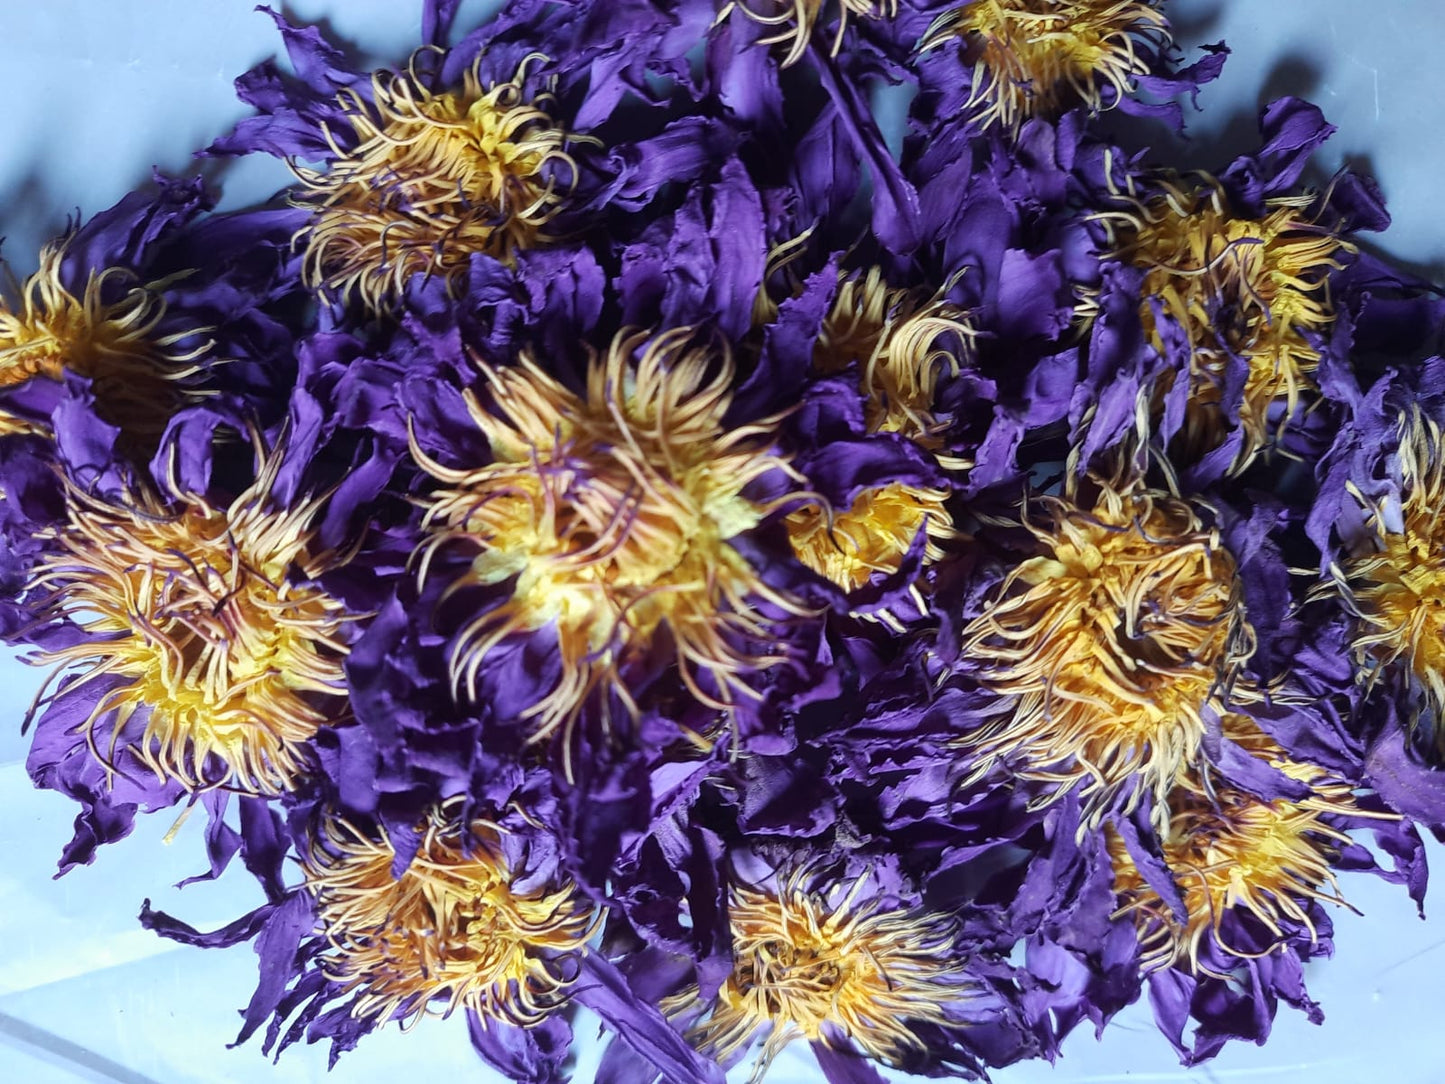 BLUE LOTUS NYMPHAEA CAERULEA DRIED FLOWERS 100% ORGANIC NATURAL | CEYLON HERBS